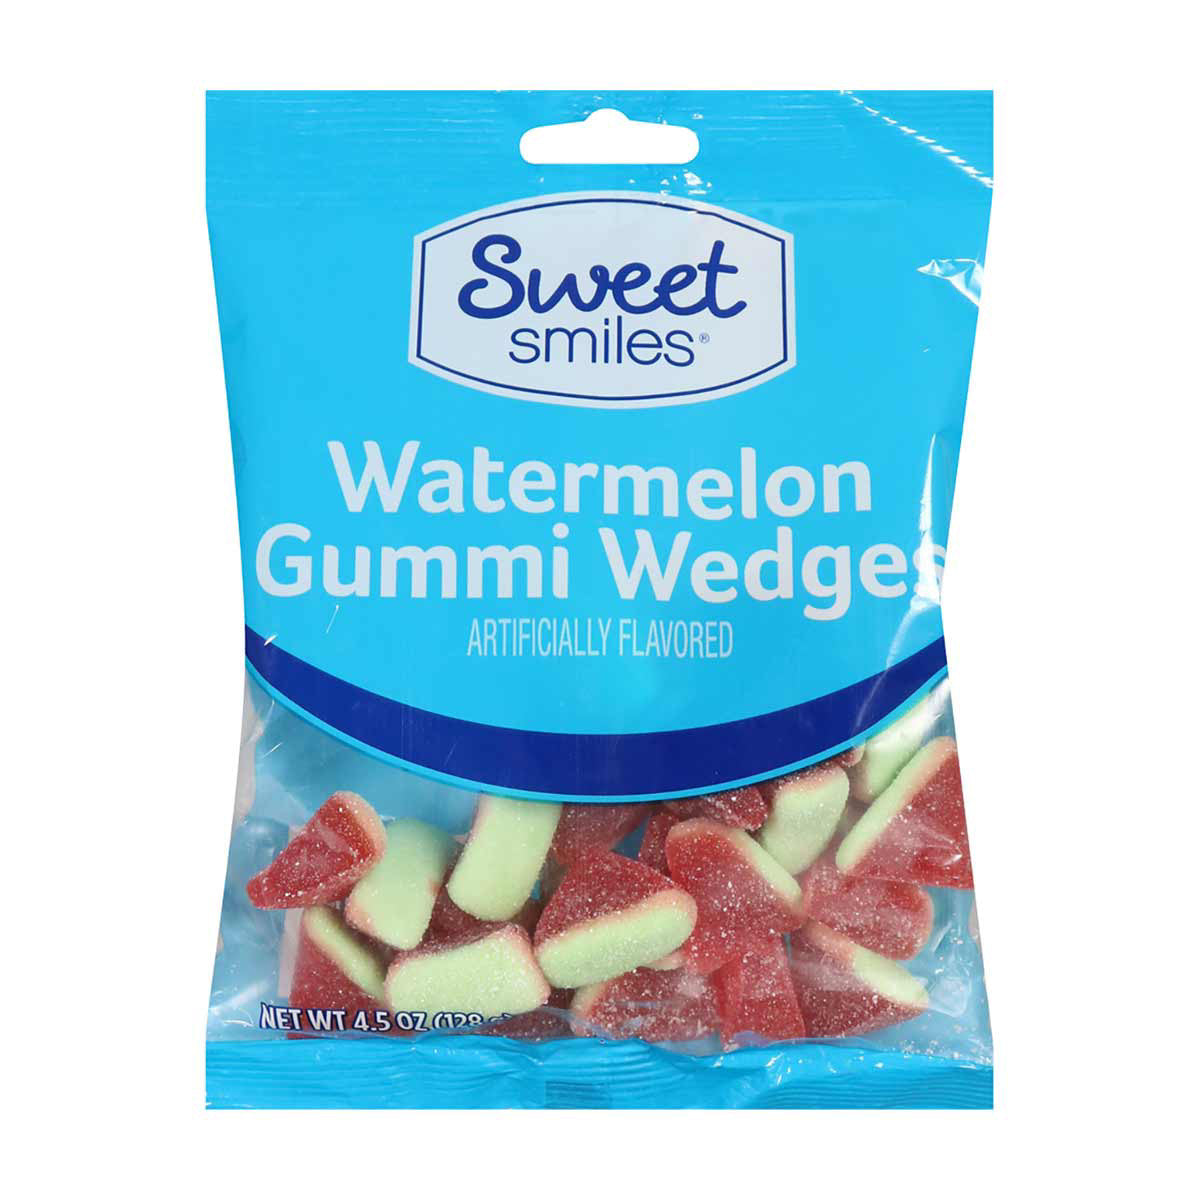 Sweet Smiles Watermelon Gummi Wedges, 4.5 Oz